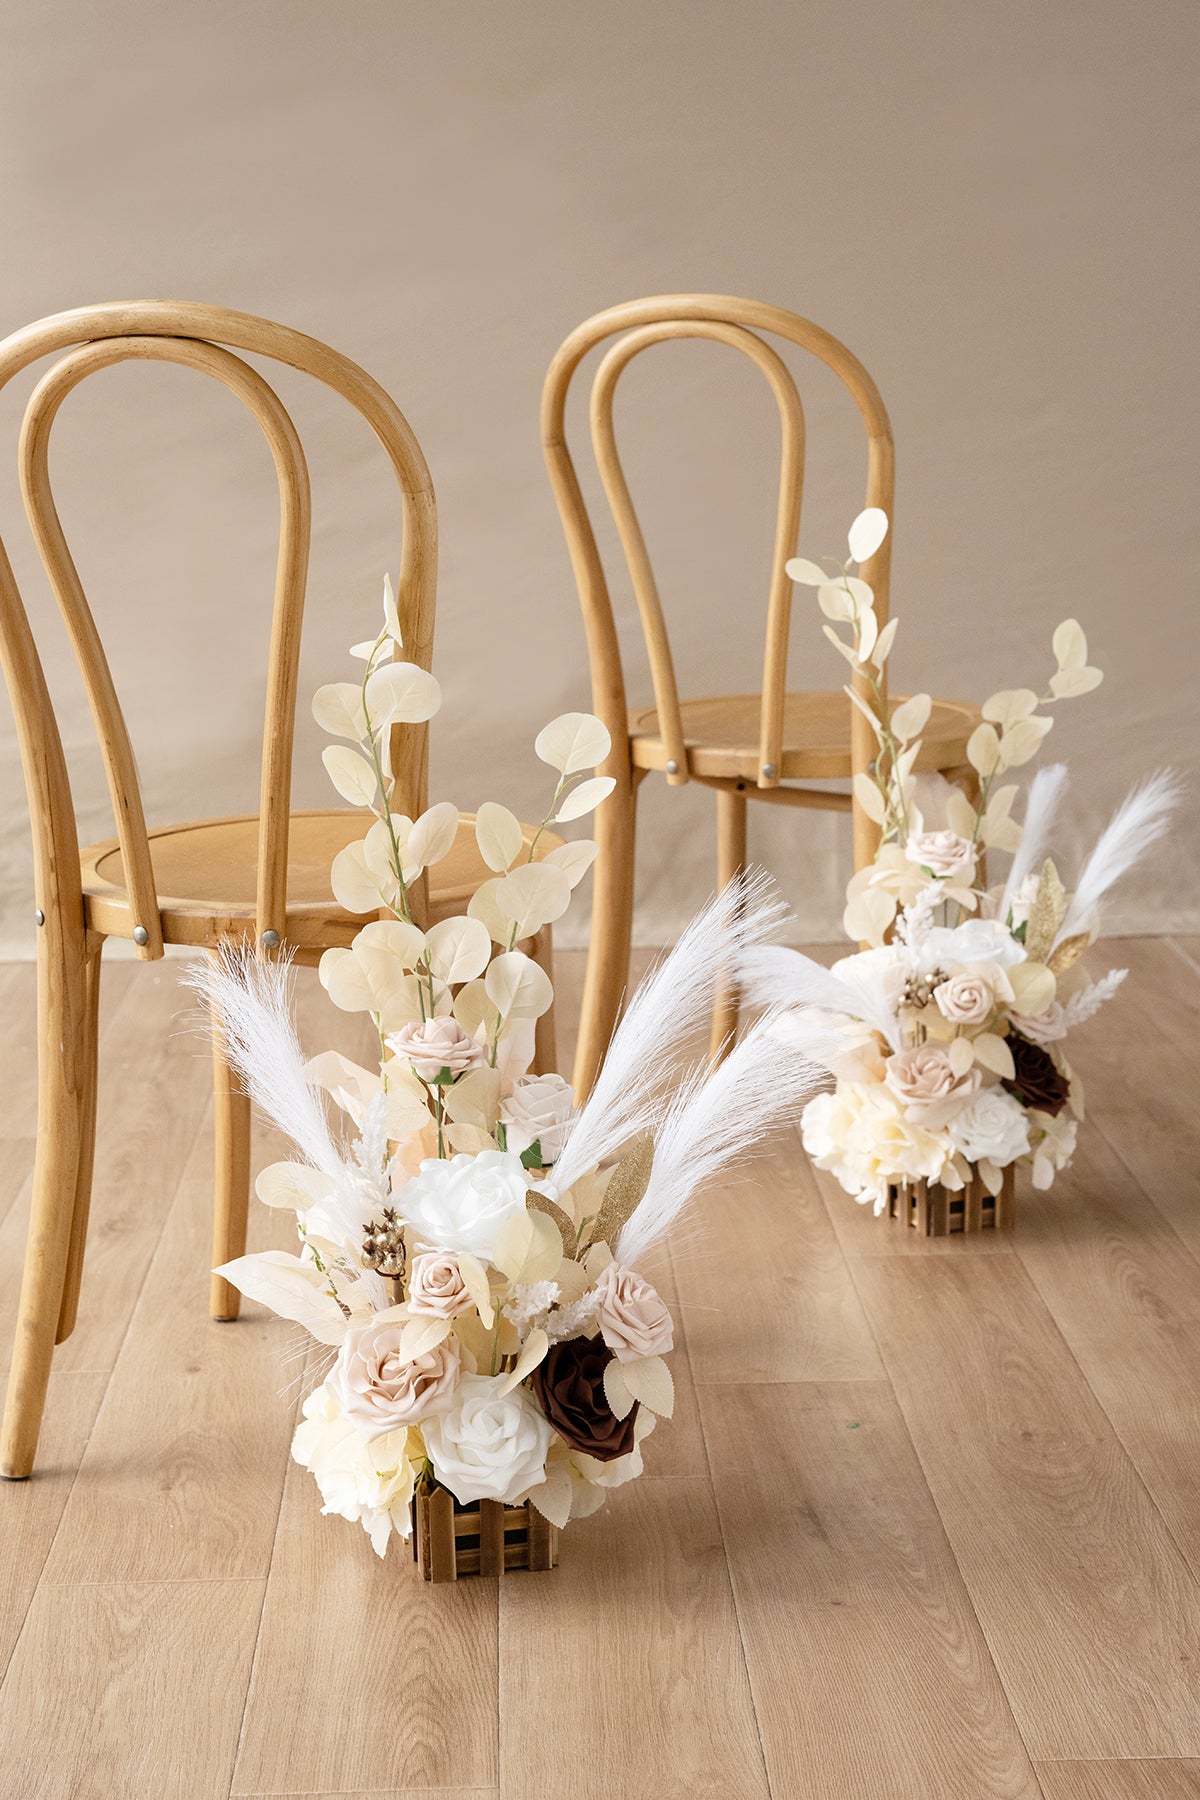 Pre-Arranged Wedding Flower Packages in White & Beige